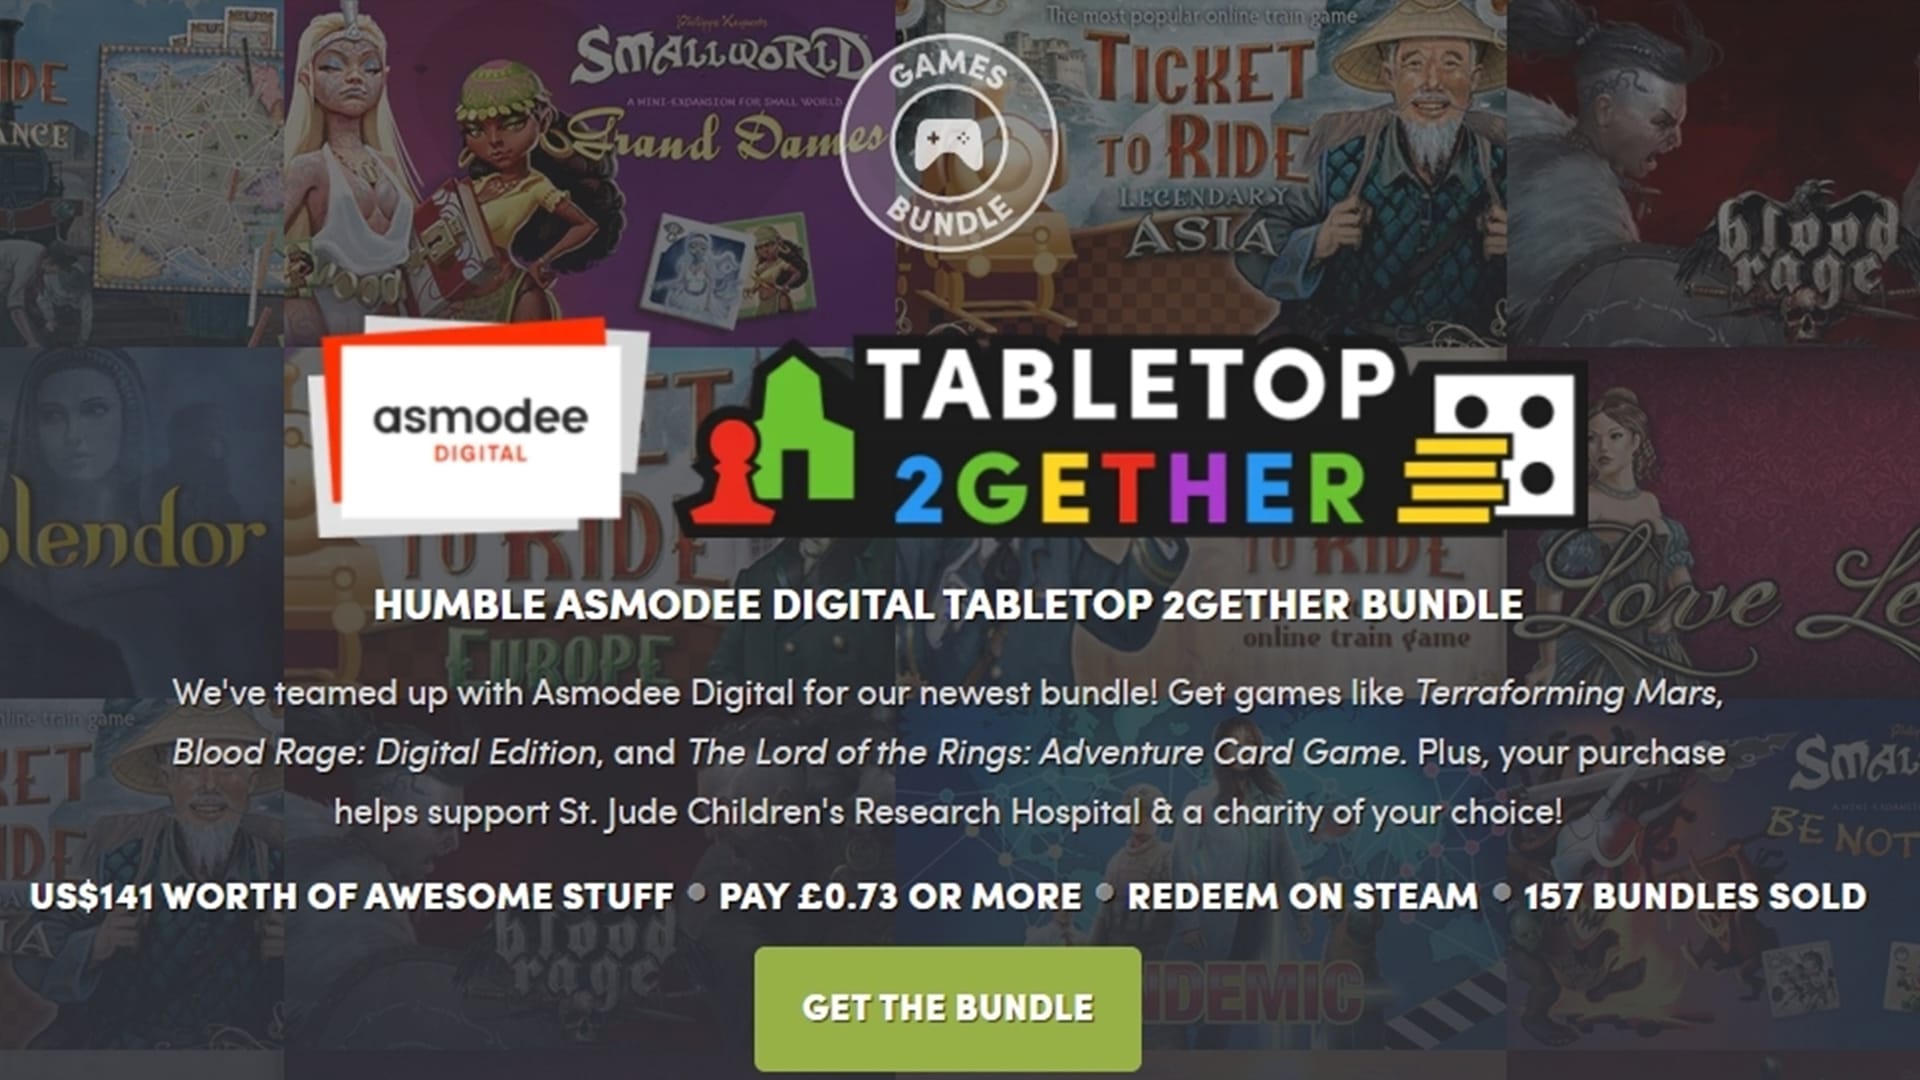 Humble Asmodee Digital Tabletop 2gether Bundle - Key Art